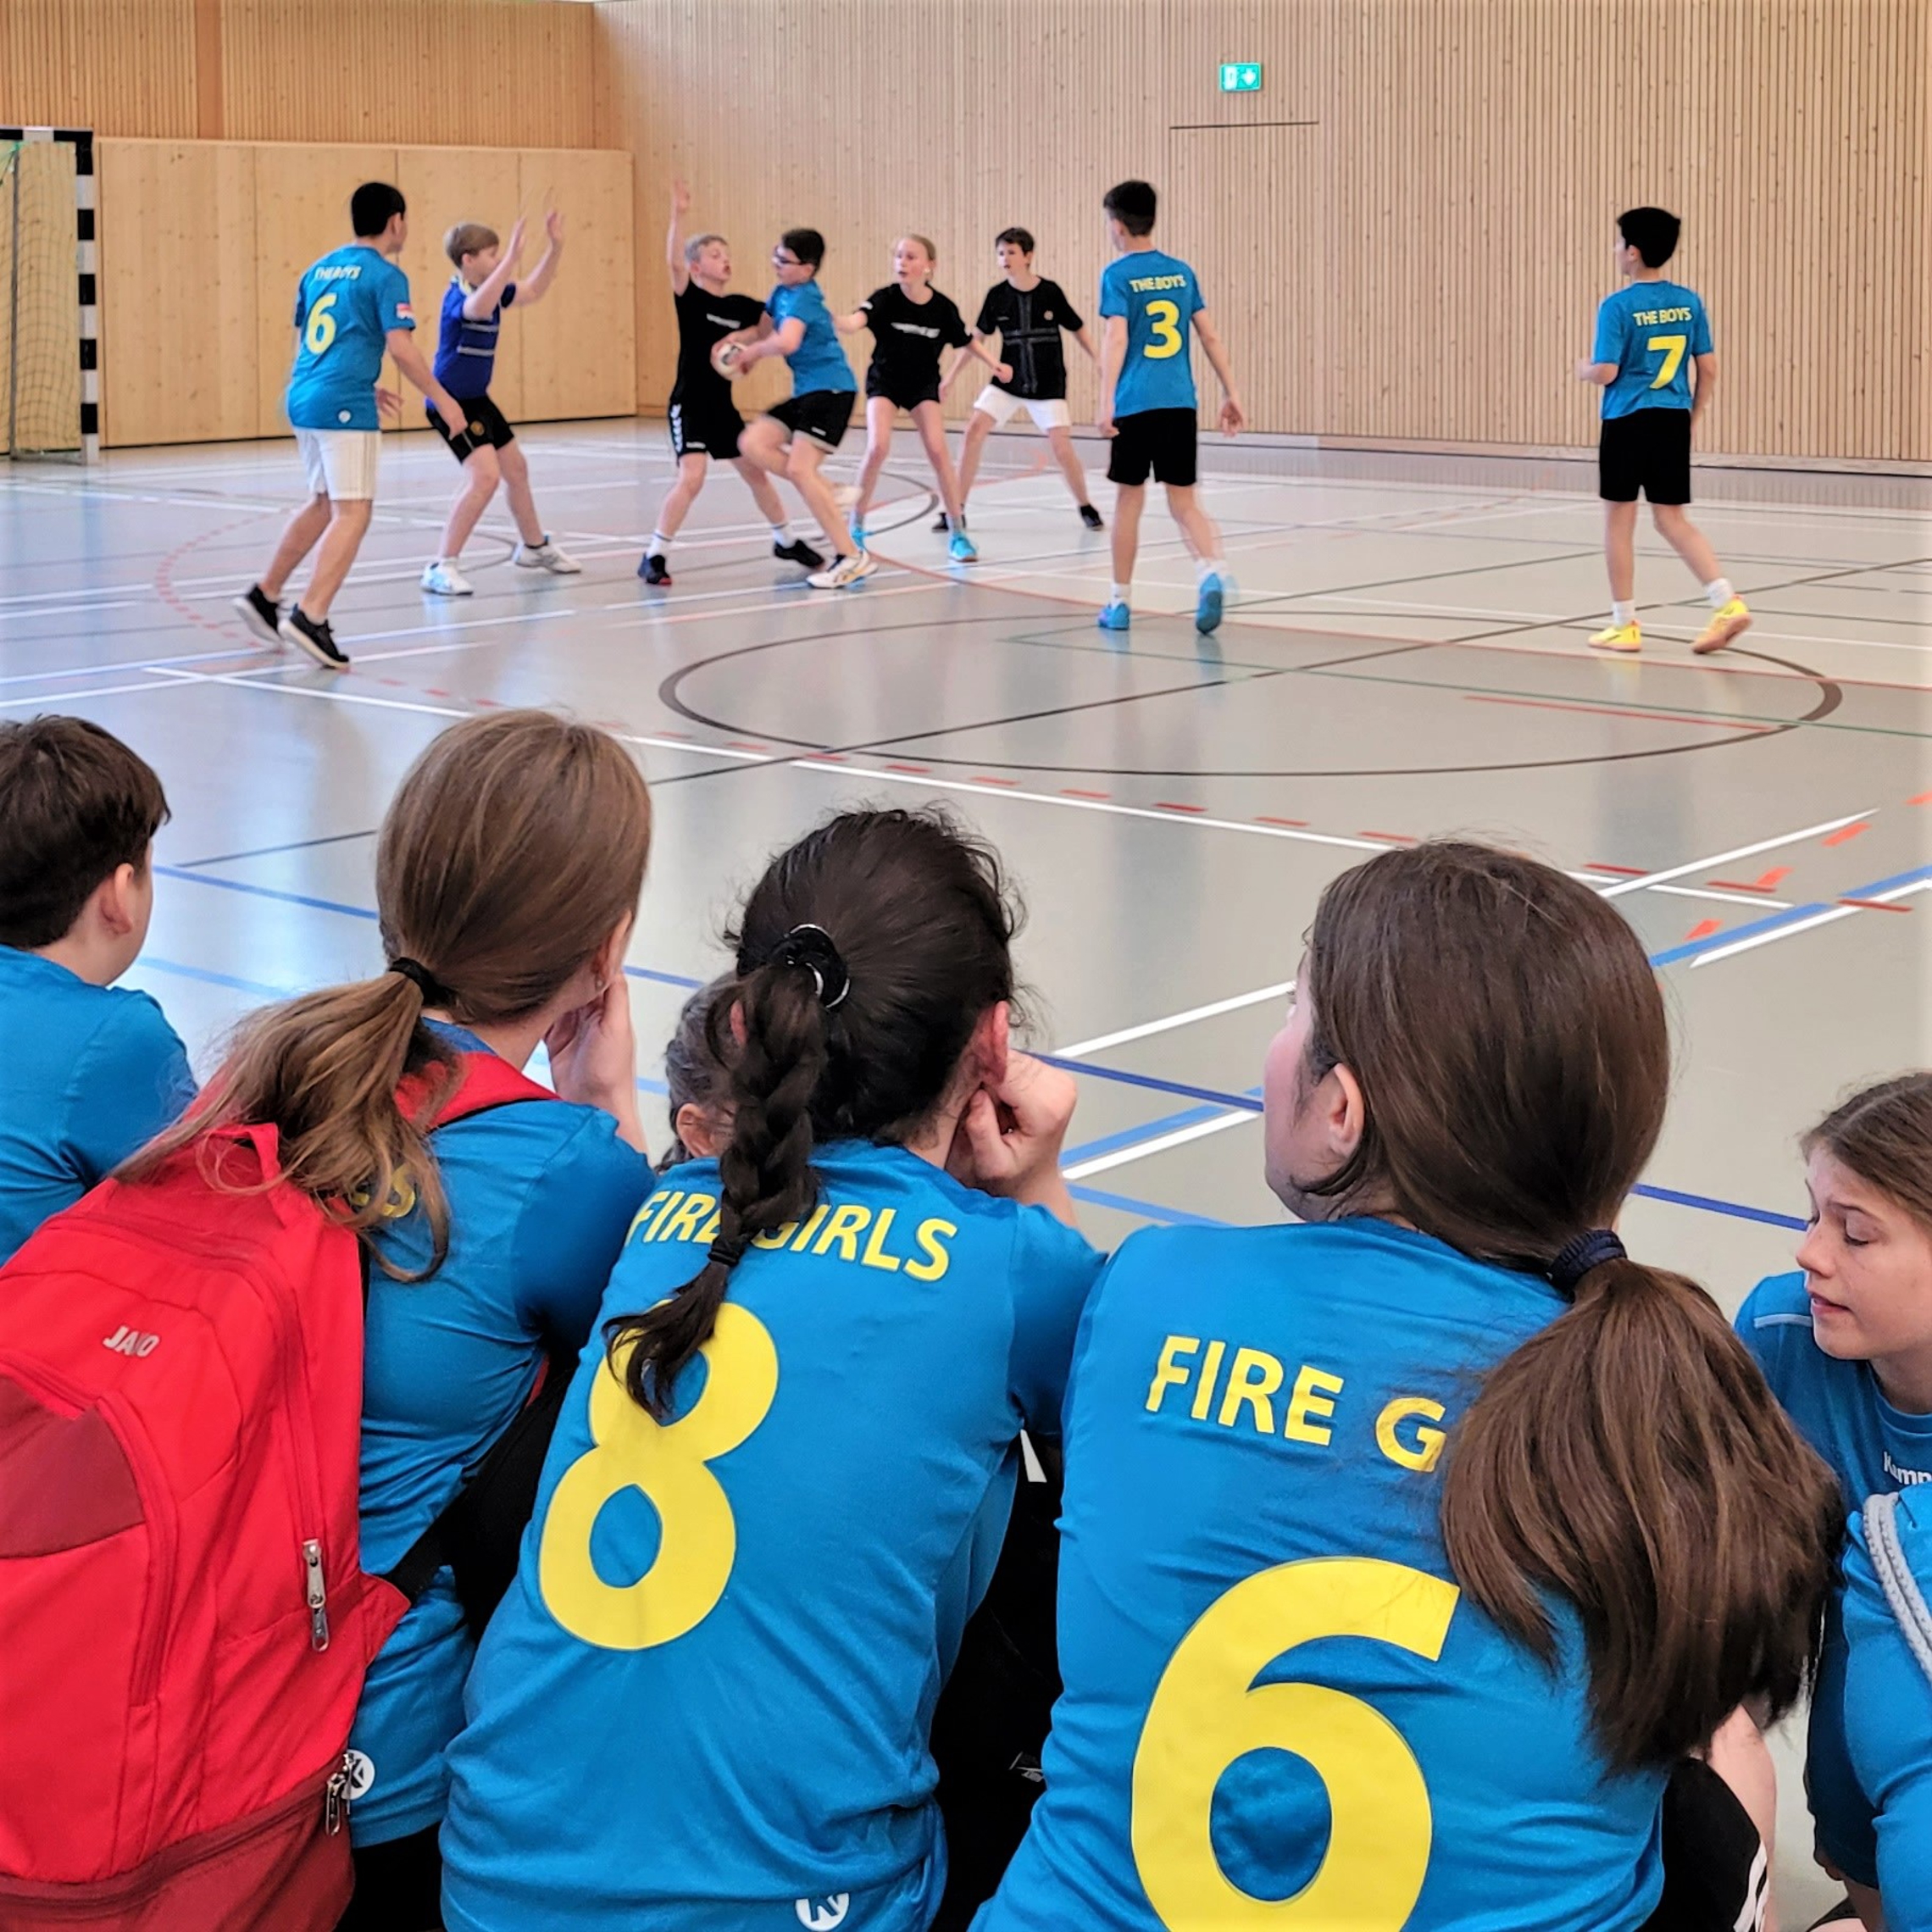 Schulhandball: Regionale Meisterschaften im vollen Gang - Handball